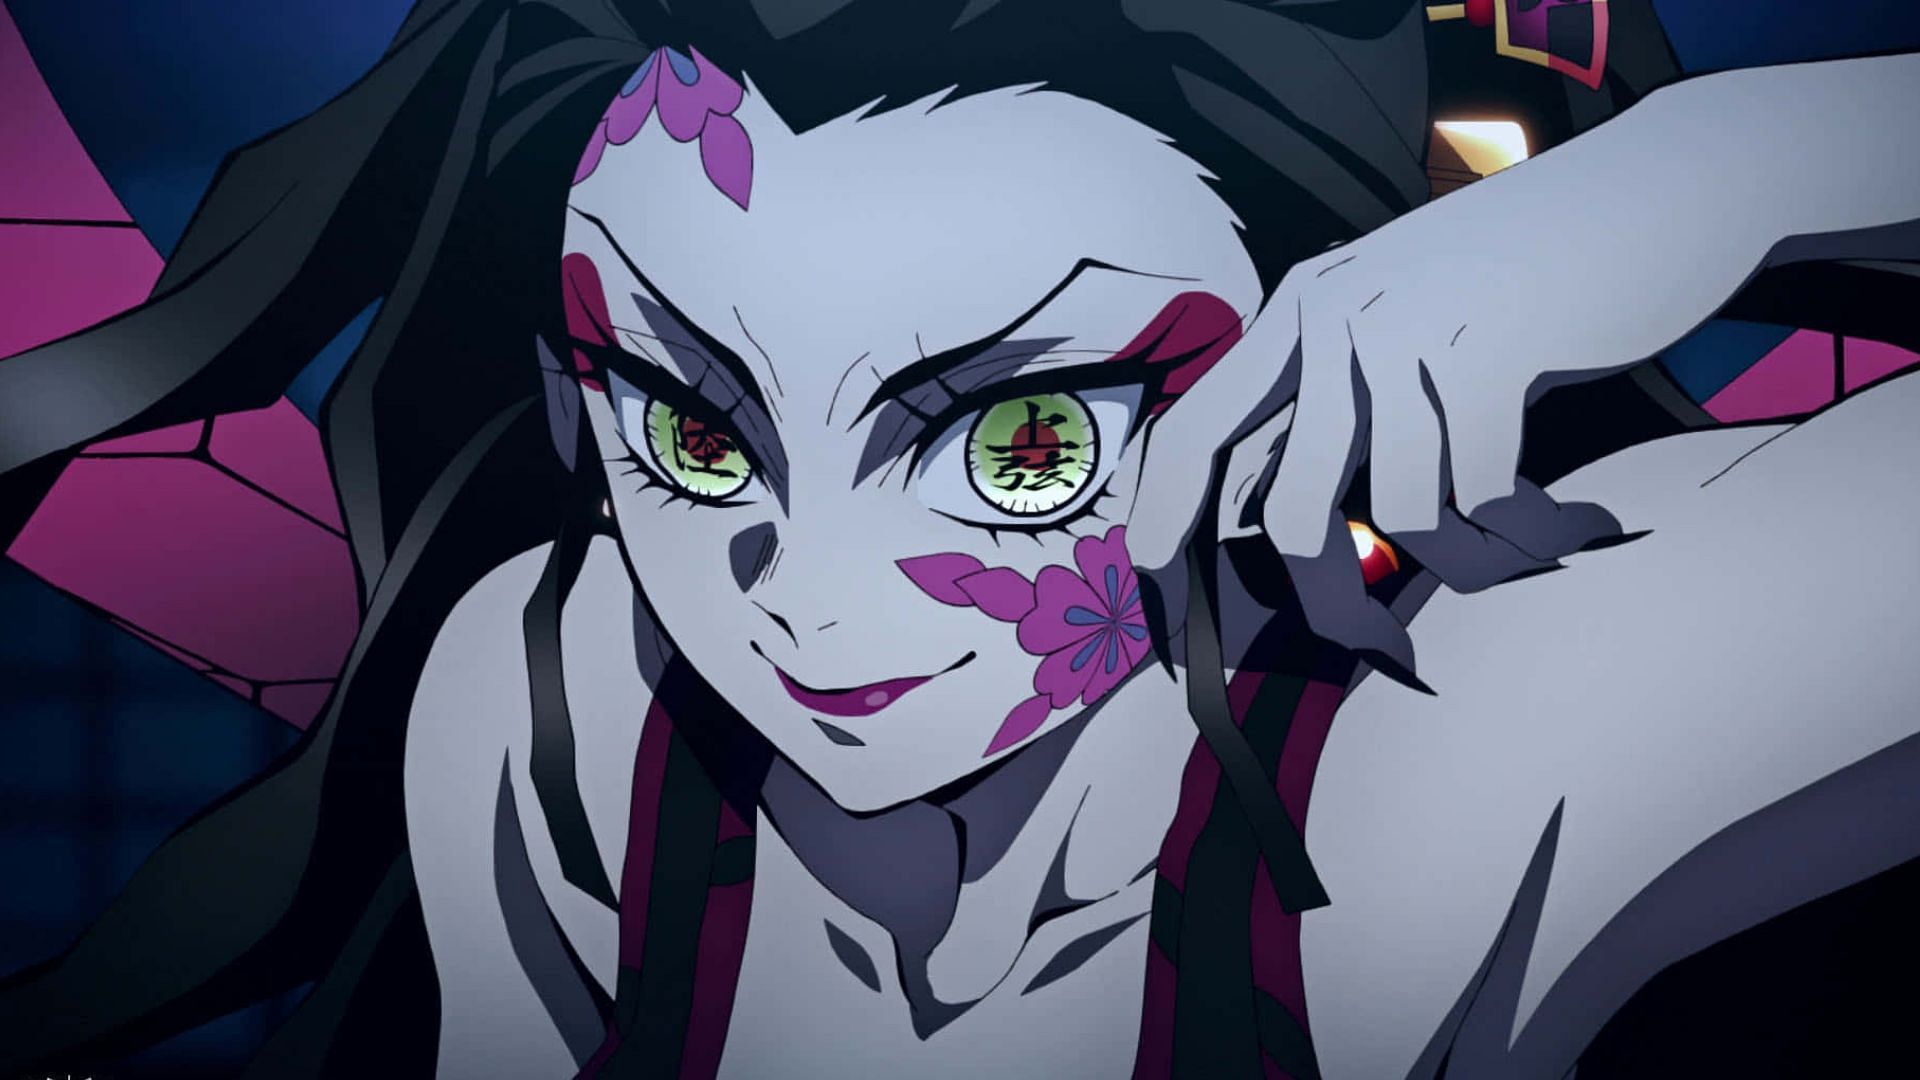 Daki as seen in the Demon Slayer anime (Image via Ufotable)